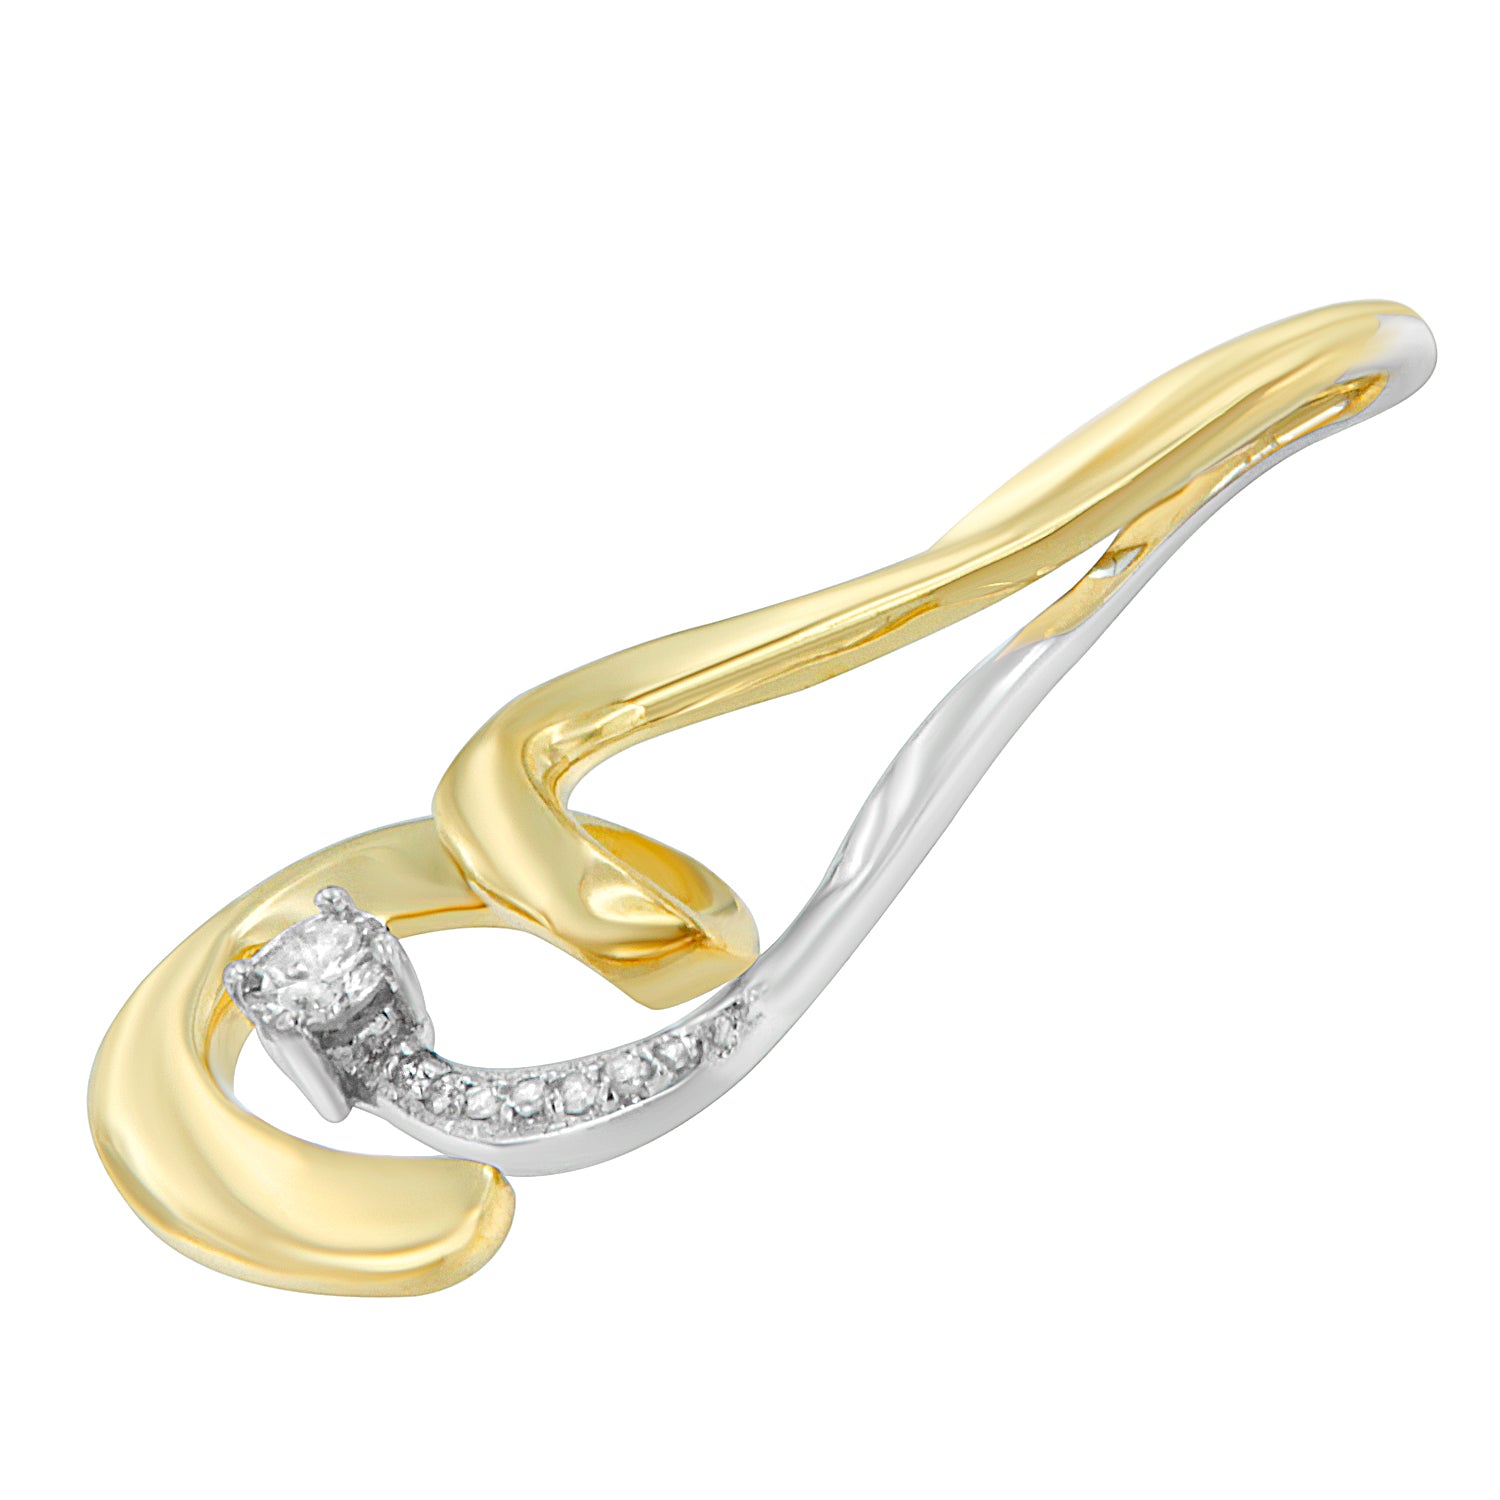 Espira 10K Two-Tone Gold 1/10 cttw Round Cut Diamond Swirl Pendant Necklace